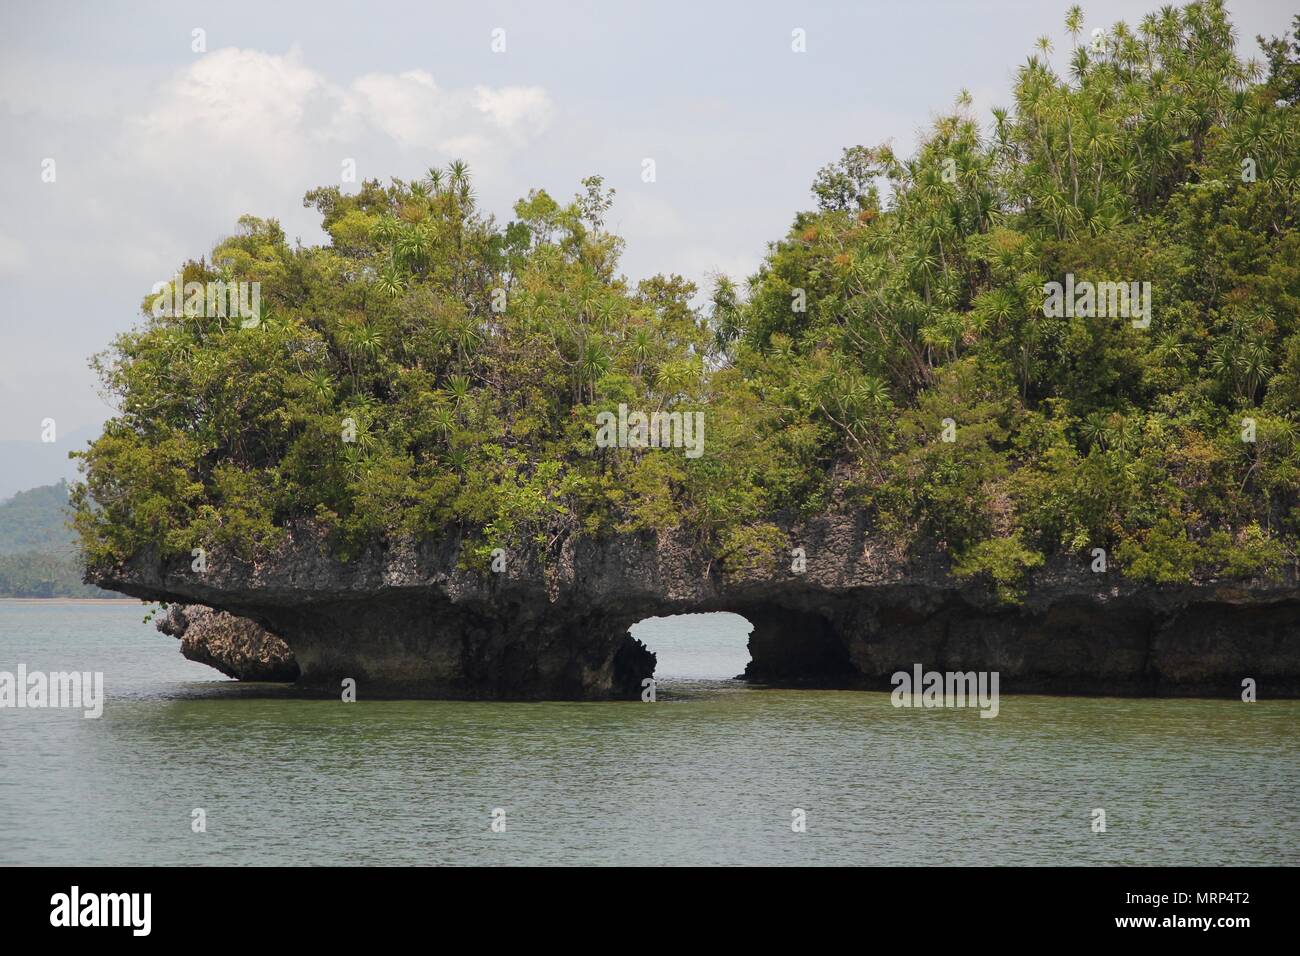 An artistic cut underneath two rocky islands in Cantilan, Surigao del Sur, Philippines Stock Photo